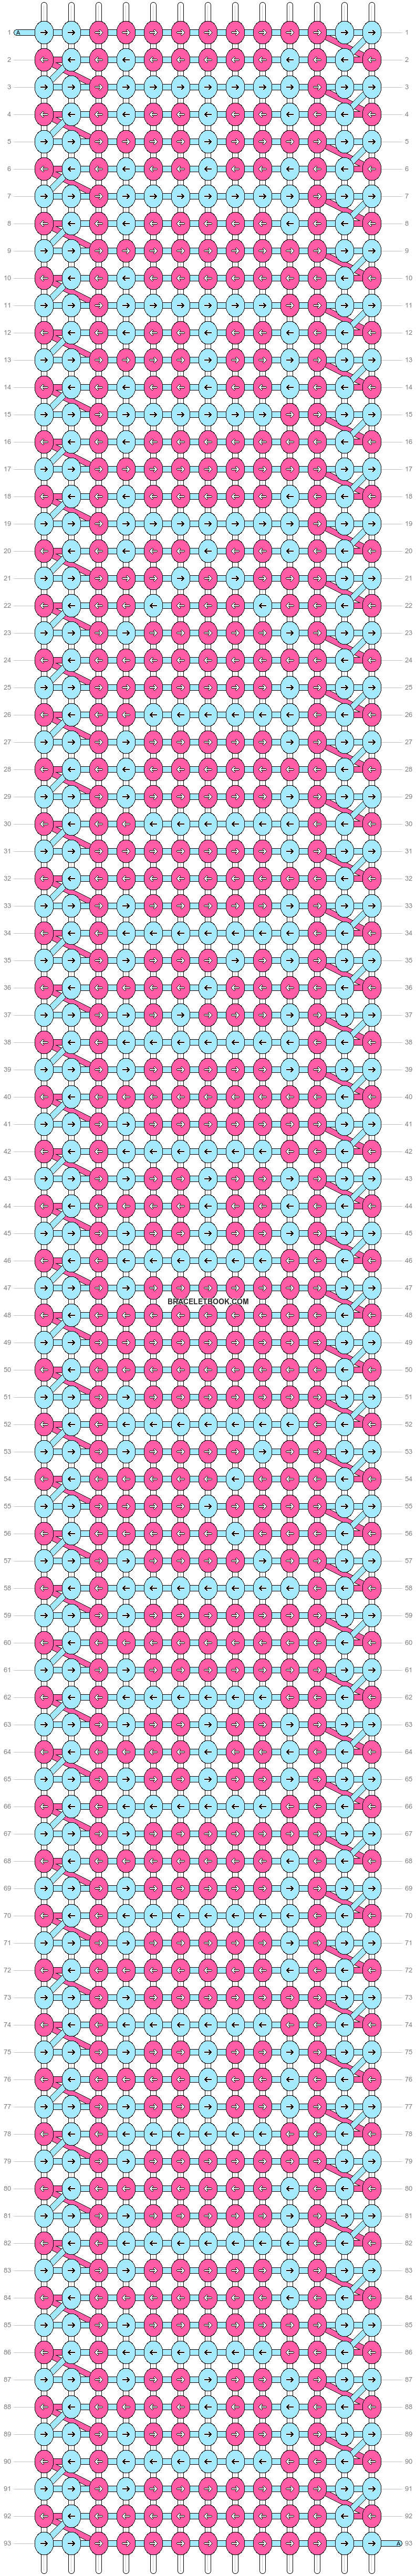 Alpha pattern #10536 variation #34309 pattern